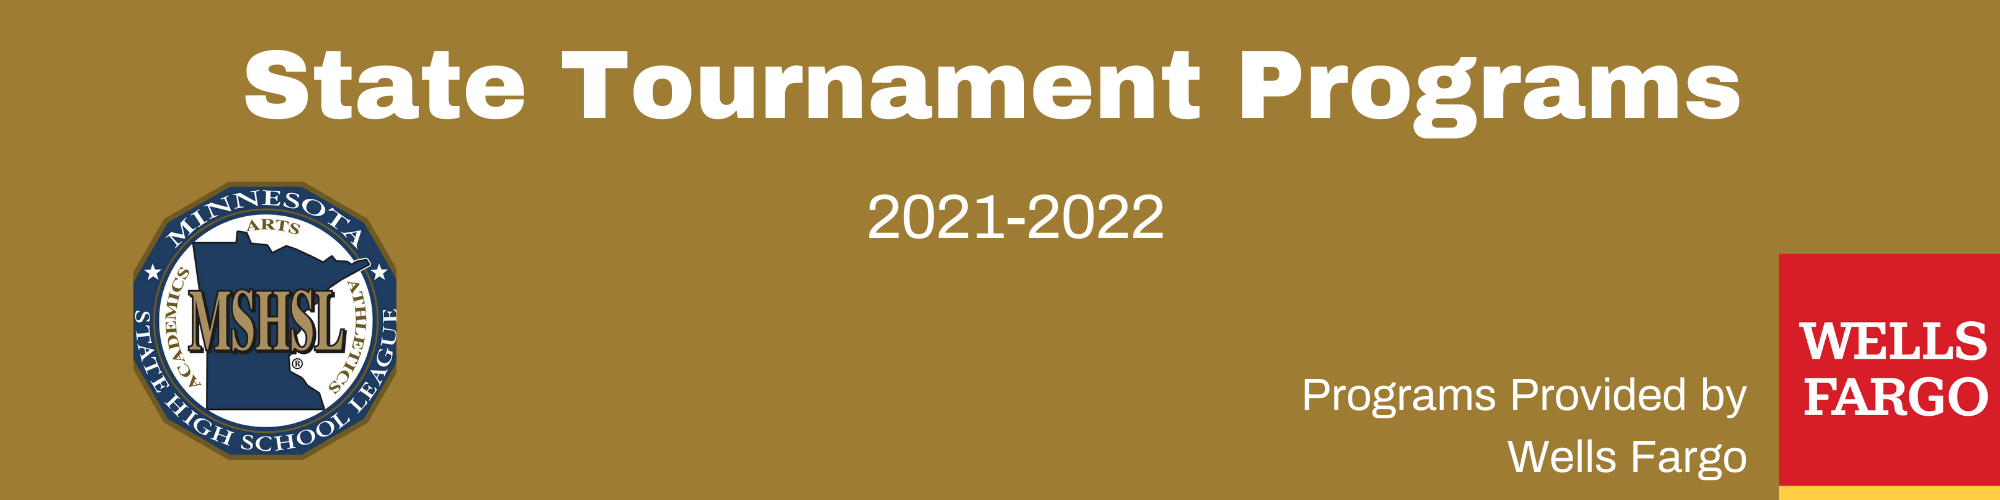 2021-2022 State Tournament Programs